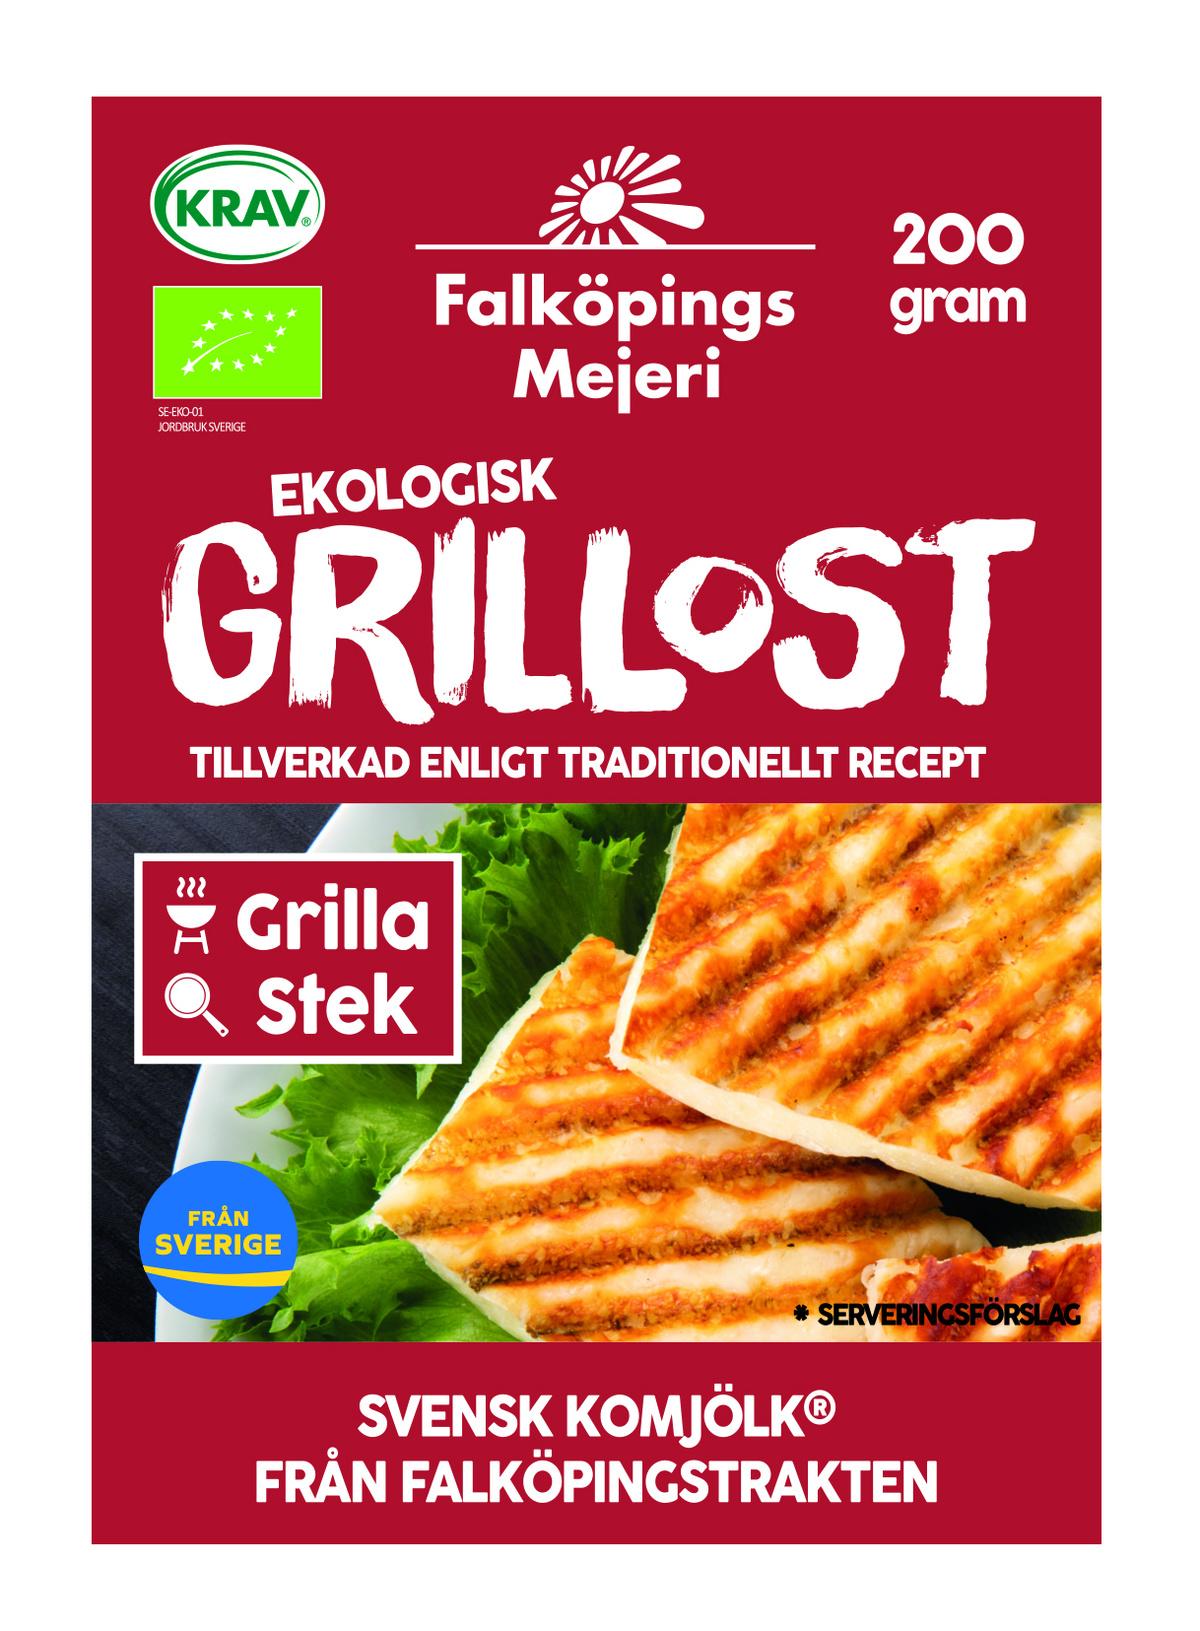 Falköpings Mejeri's Grillost '